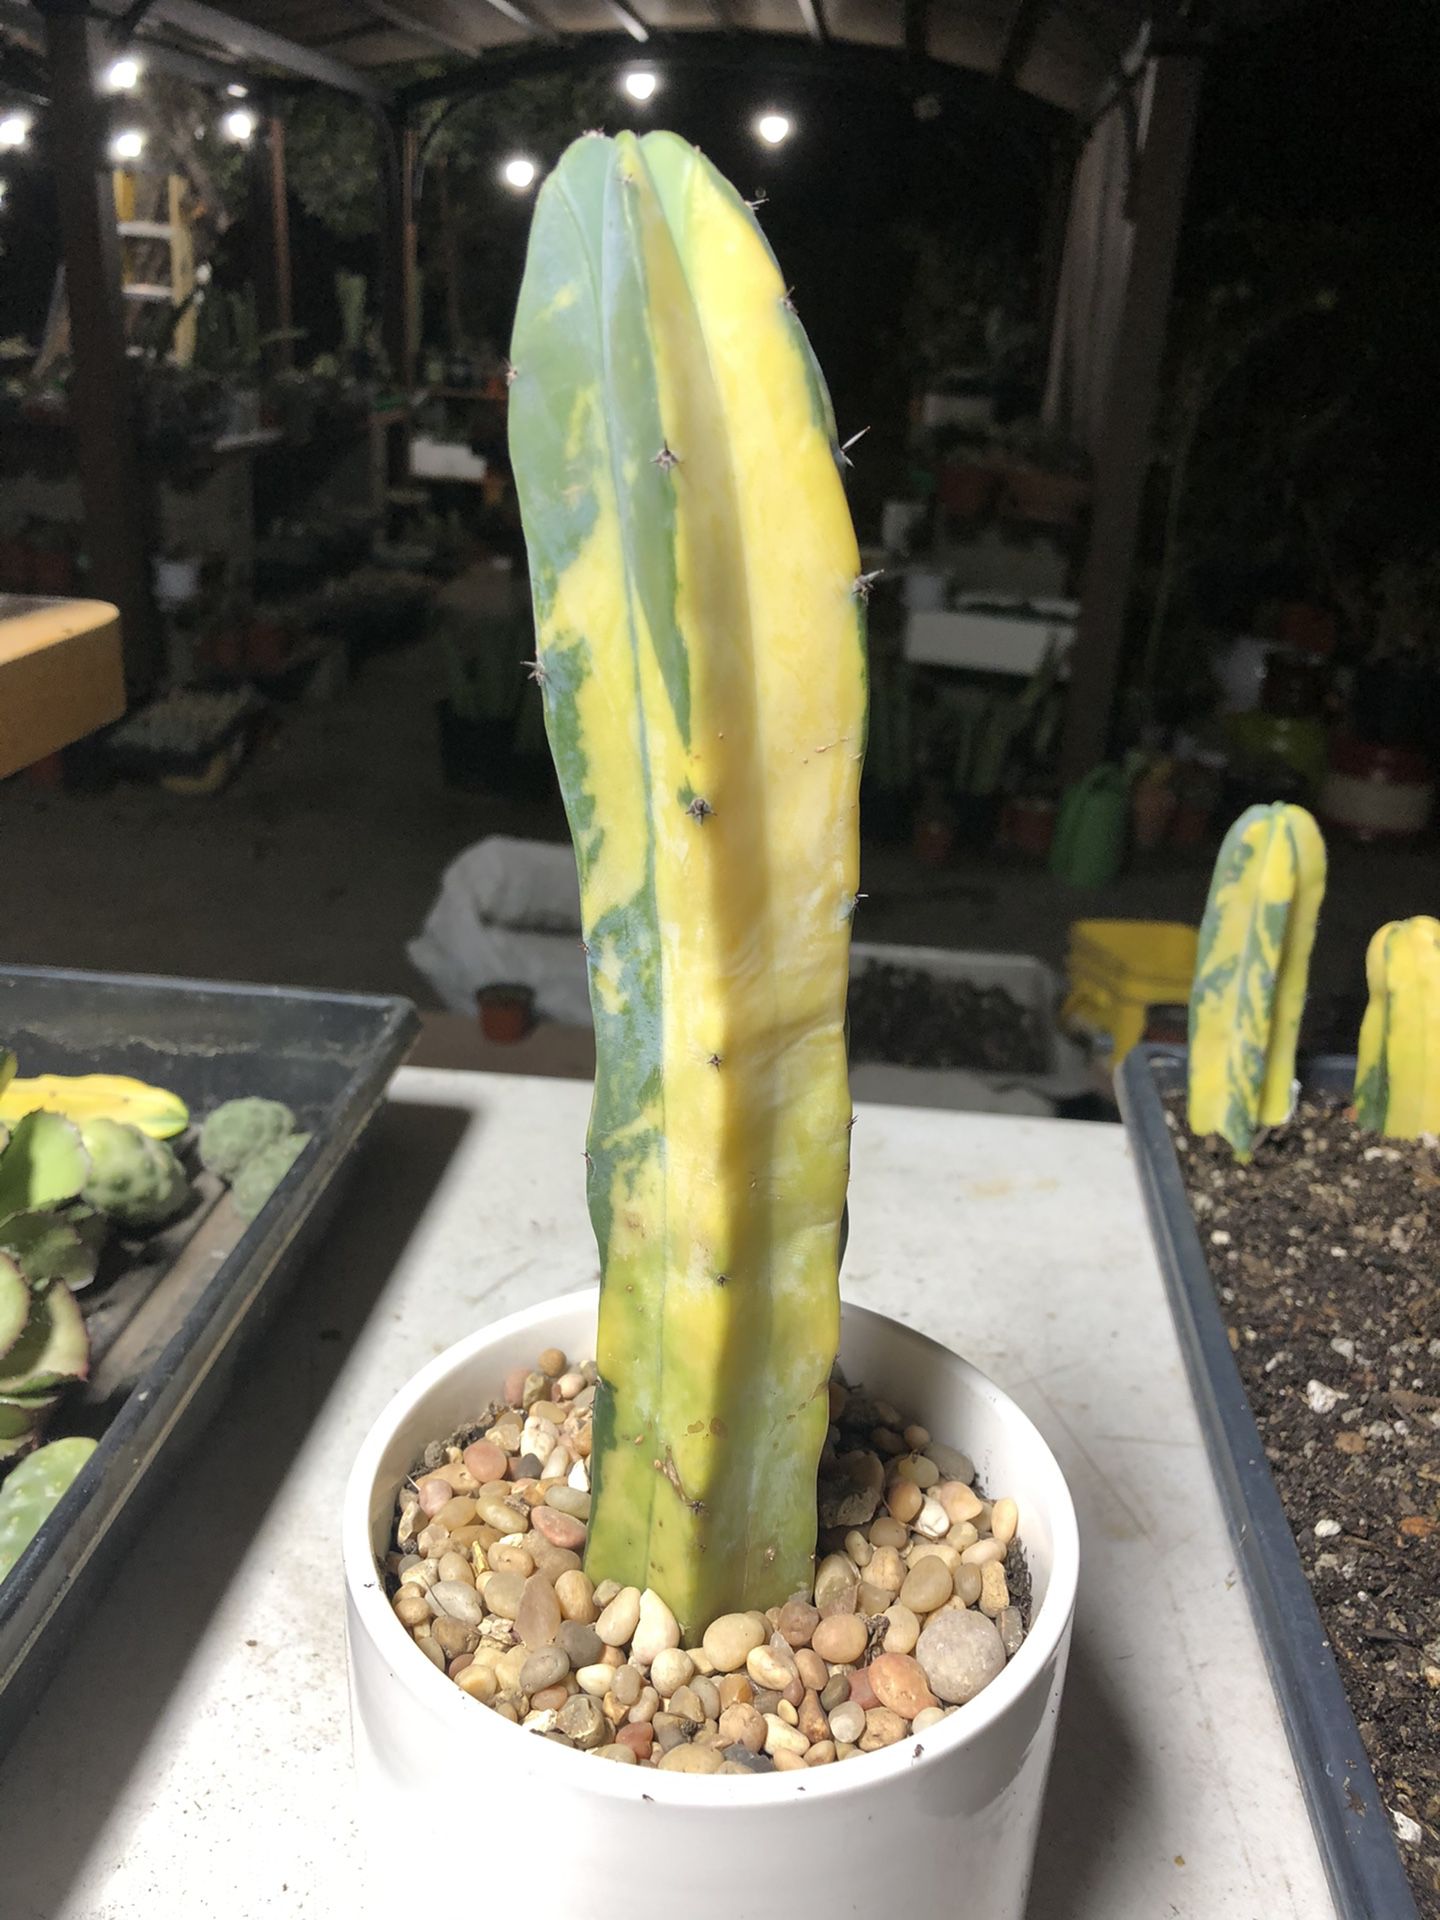 1 myrtillocactus variegated, 9” tall. $75